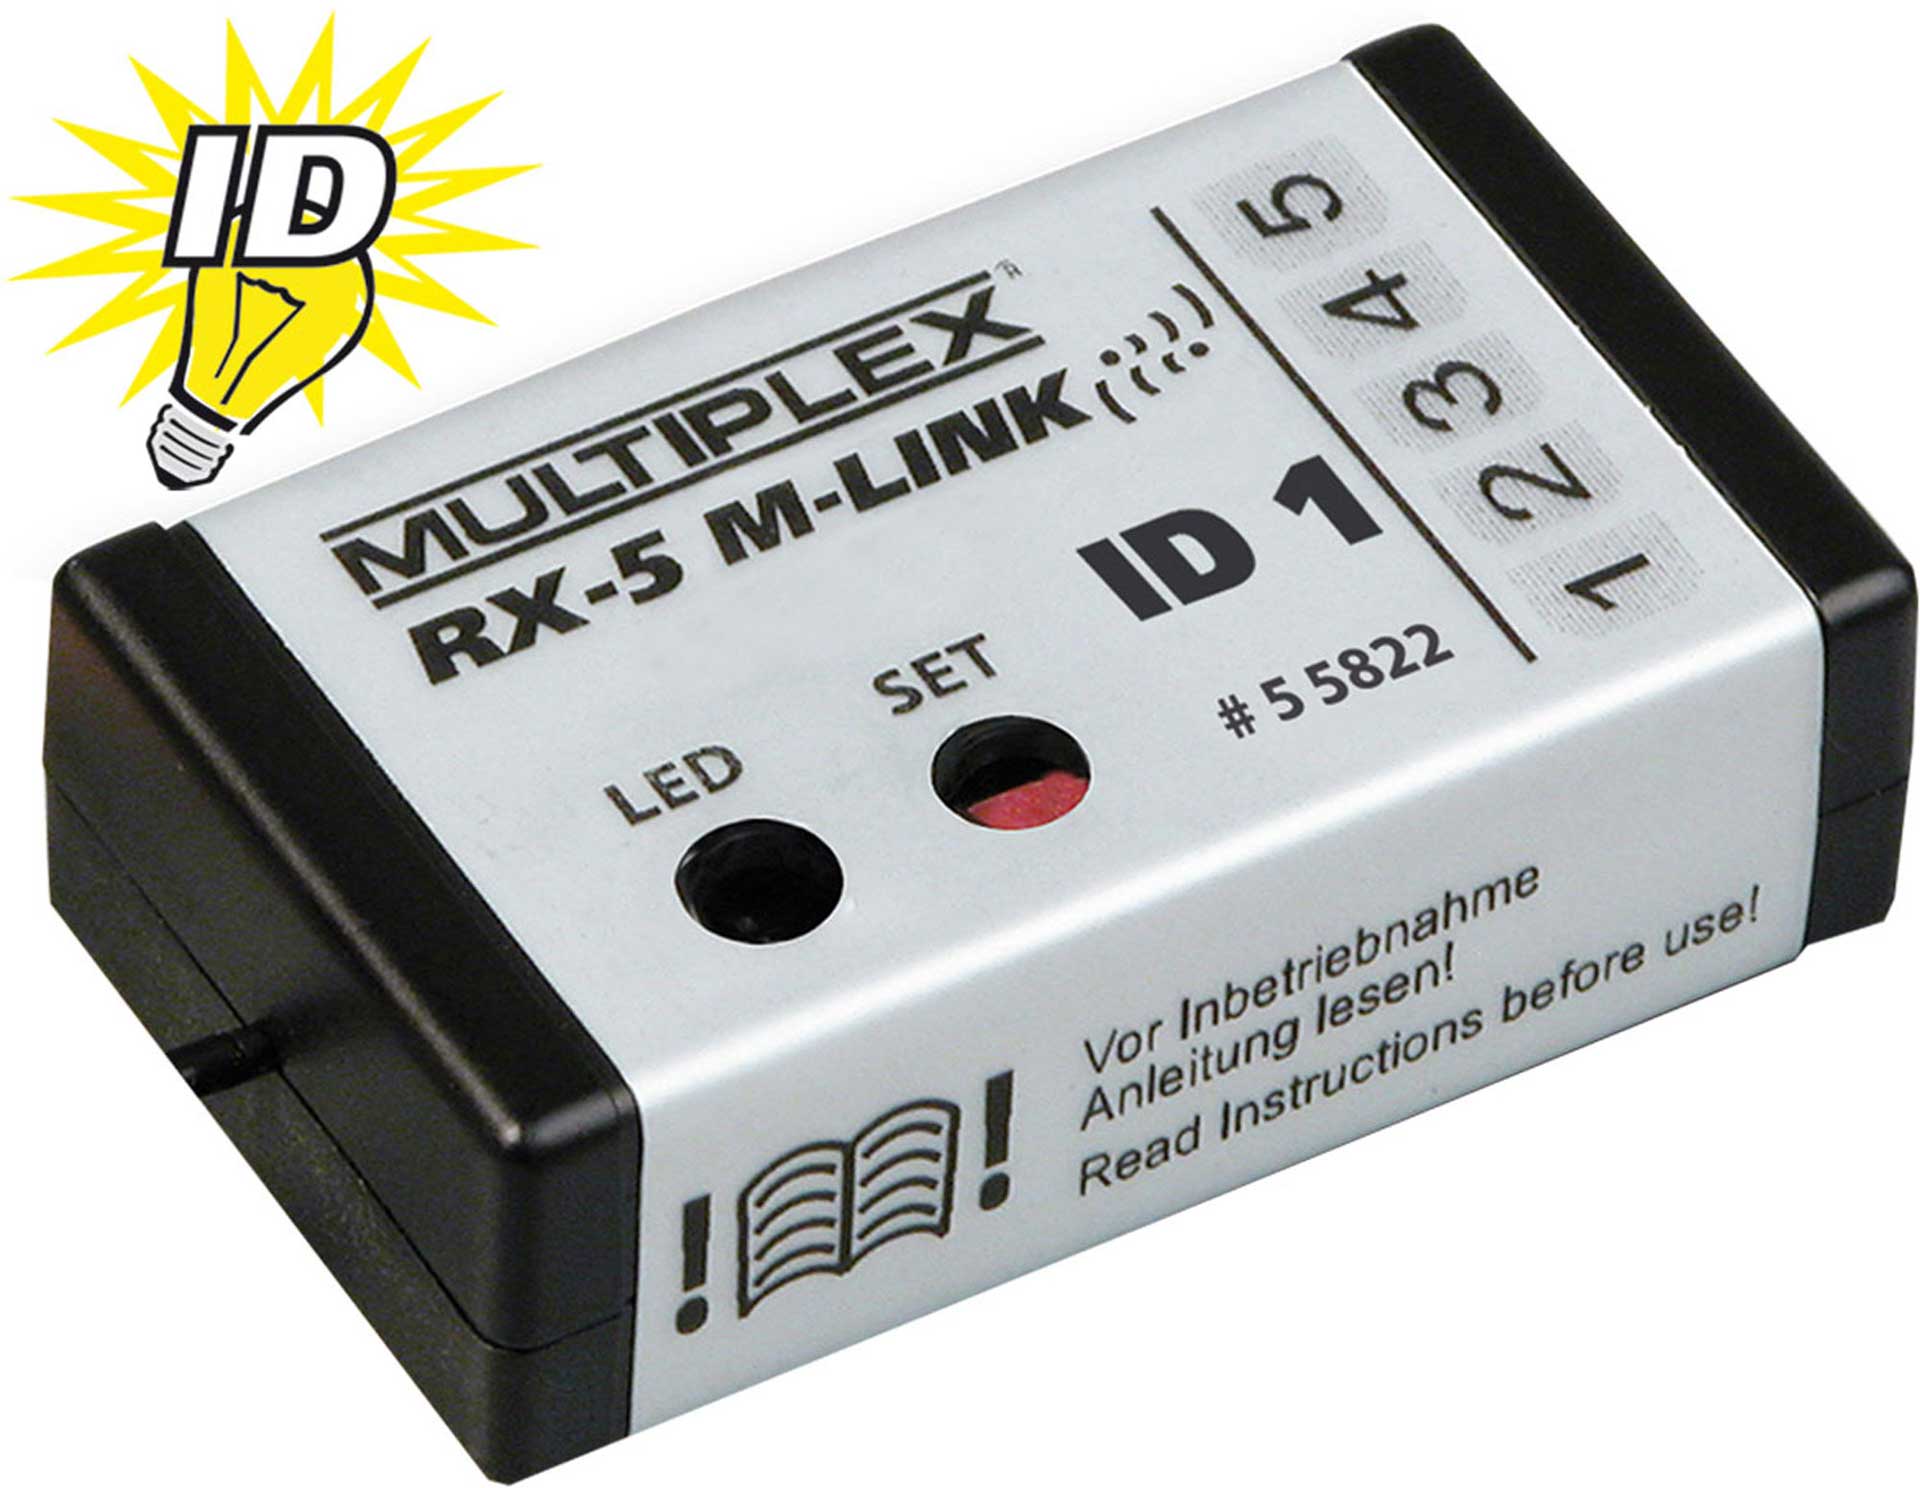 MULTIPLEX RX-5 SMART ID 1 "FREE" 2.4GHZ M-LINK